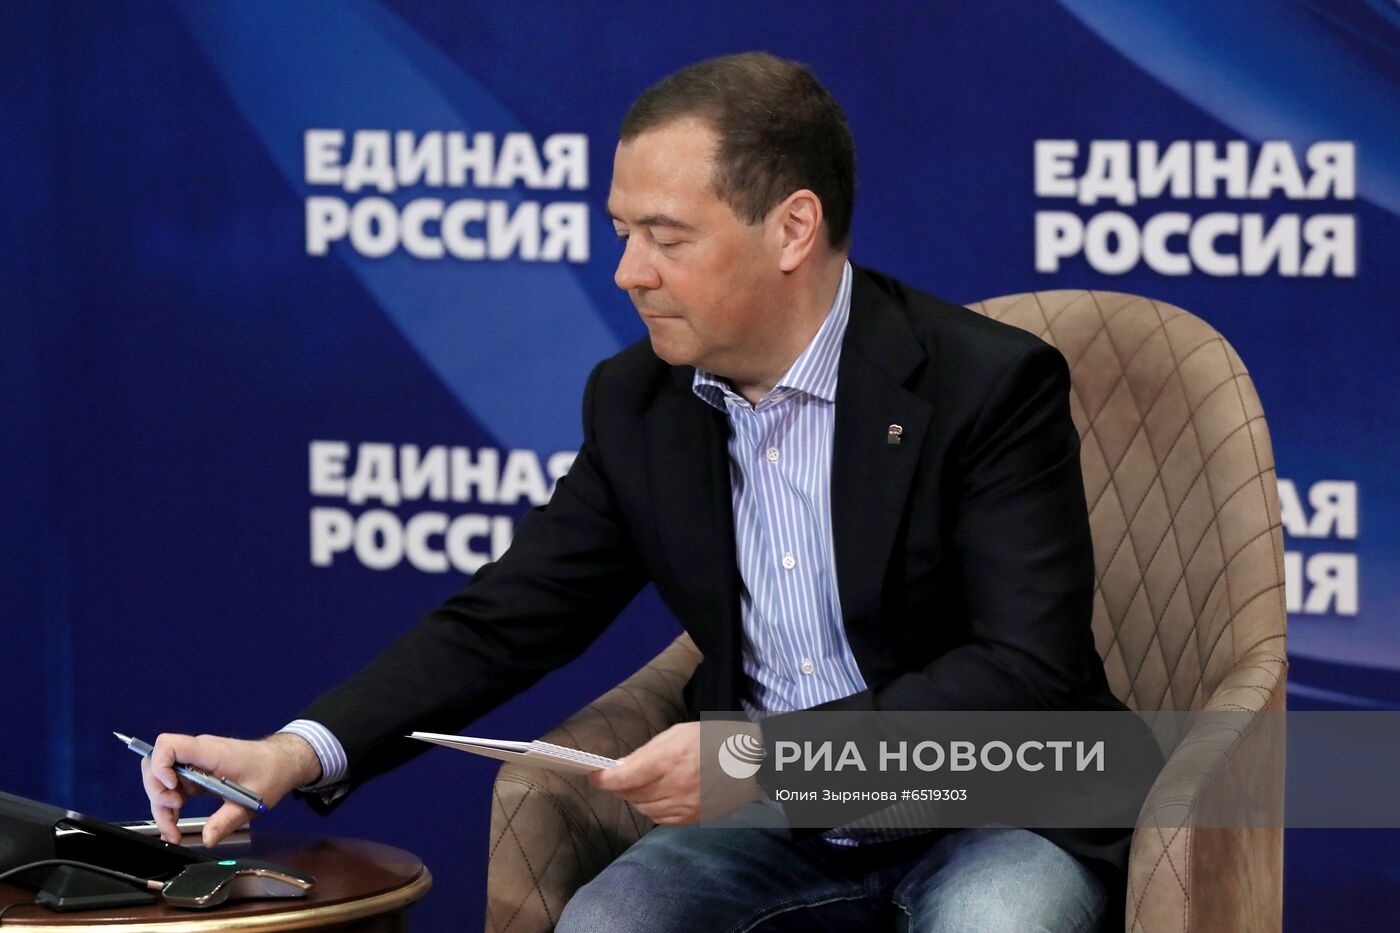 Встреча председателя ЕР,  зампредседателя Совбеза РФ Д. Медведева с молодыми кандидатами на выборы в Госдуму РФ